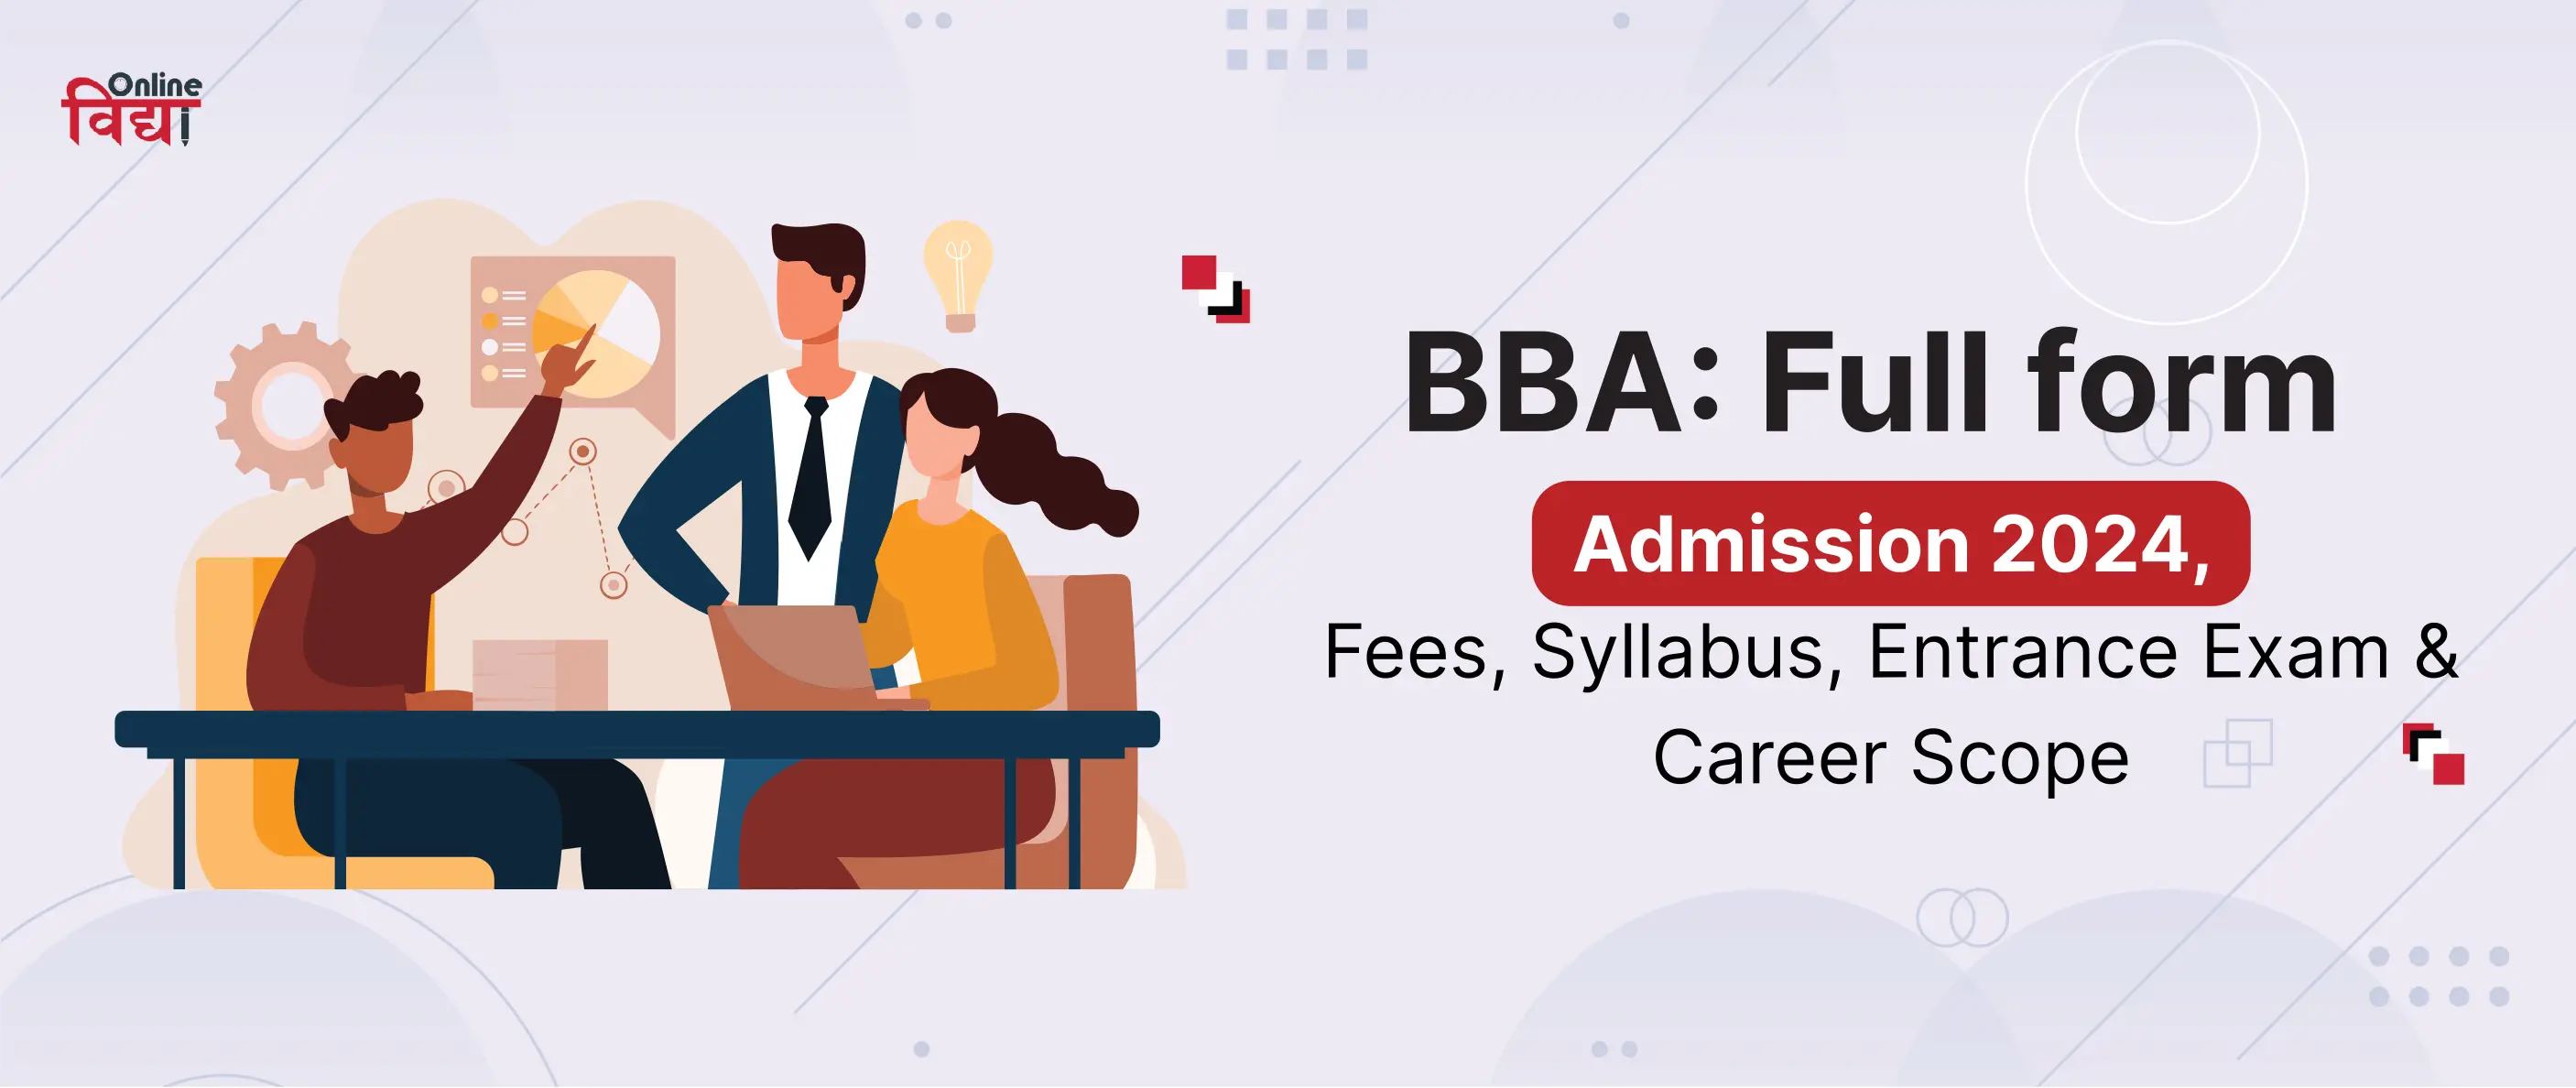 BBA: Full form, Admission 2024, Fees, Syllabus, Entrance Exam & Career Scope